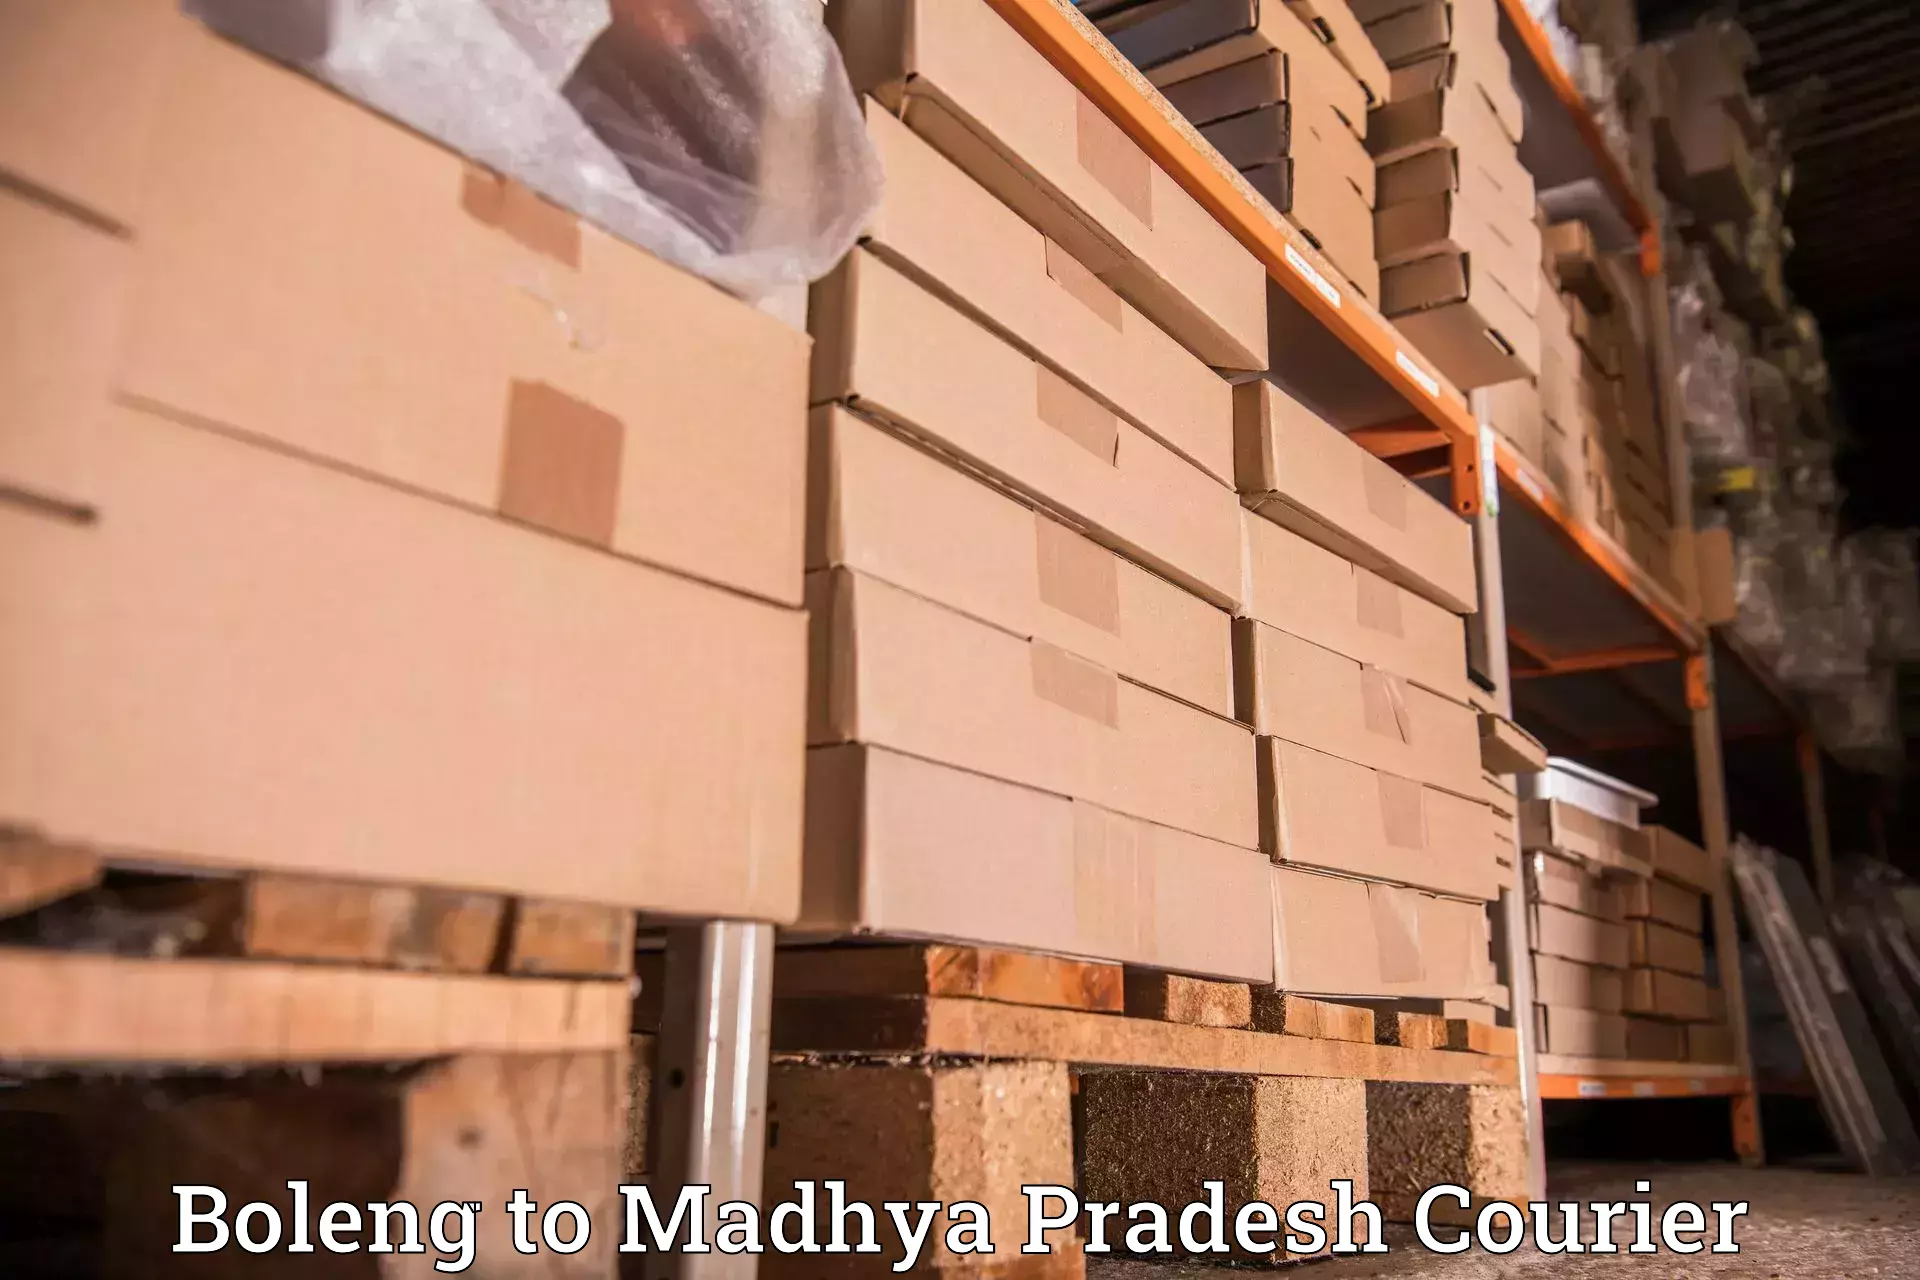 Courier service efficiency Boleng to Ujjain